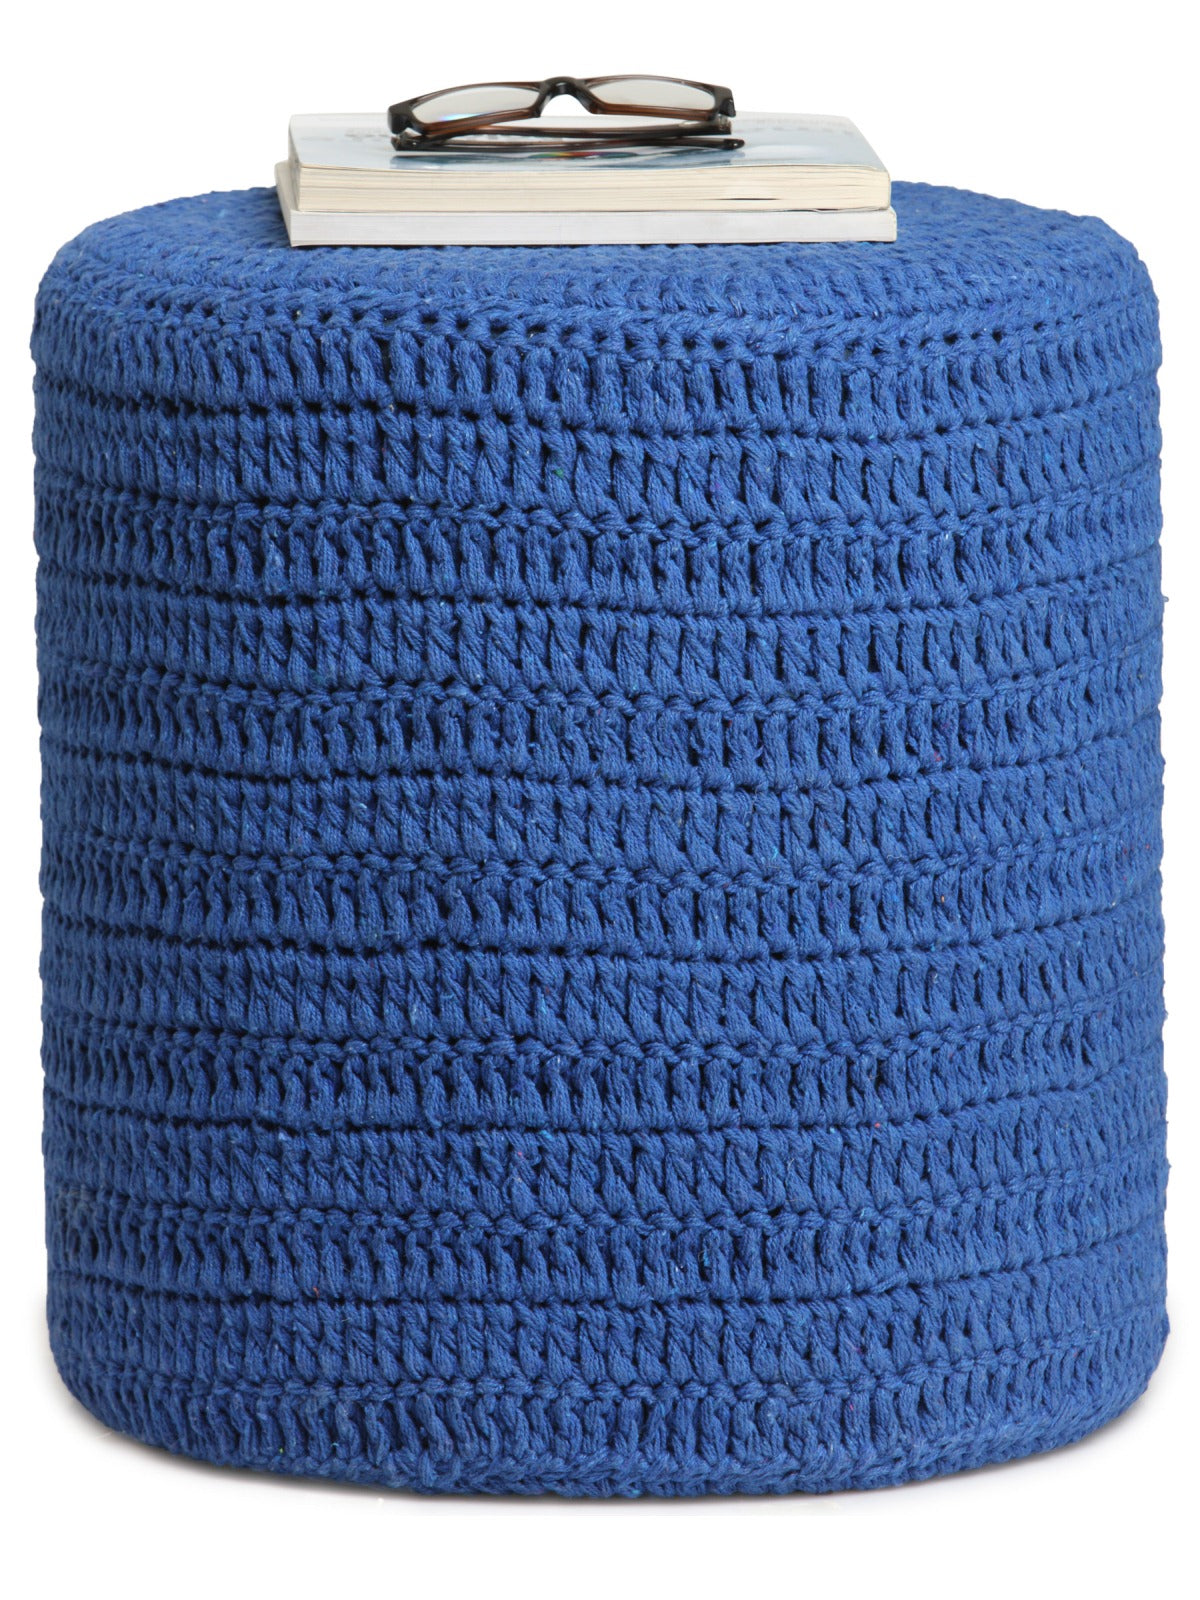 Blue Cylindrical Shape Ottoman/Pouffe